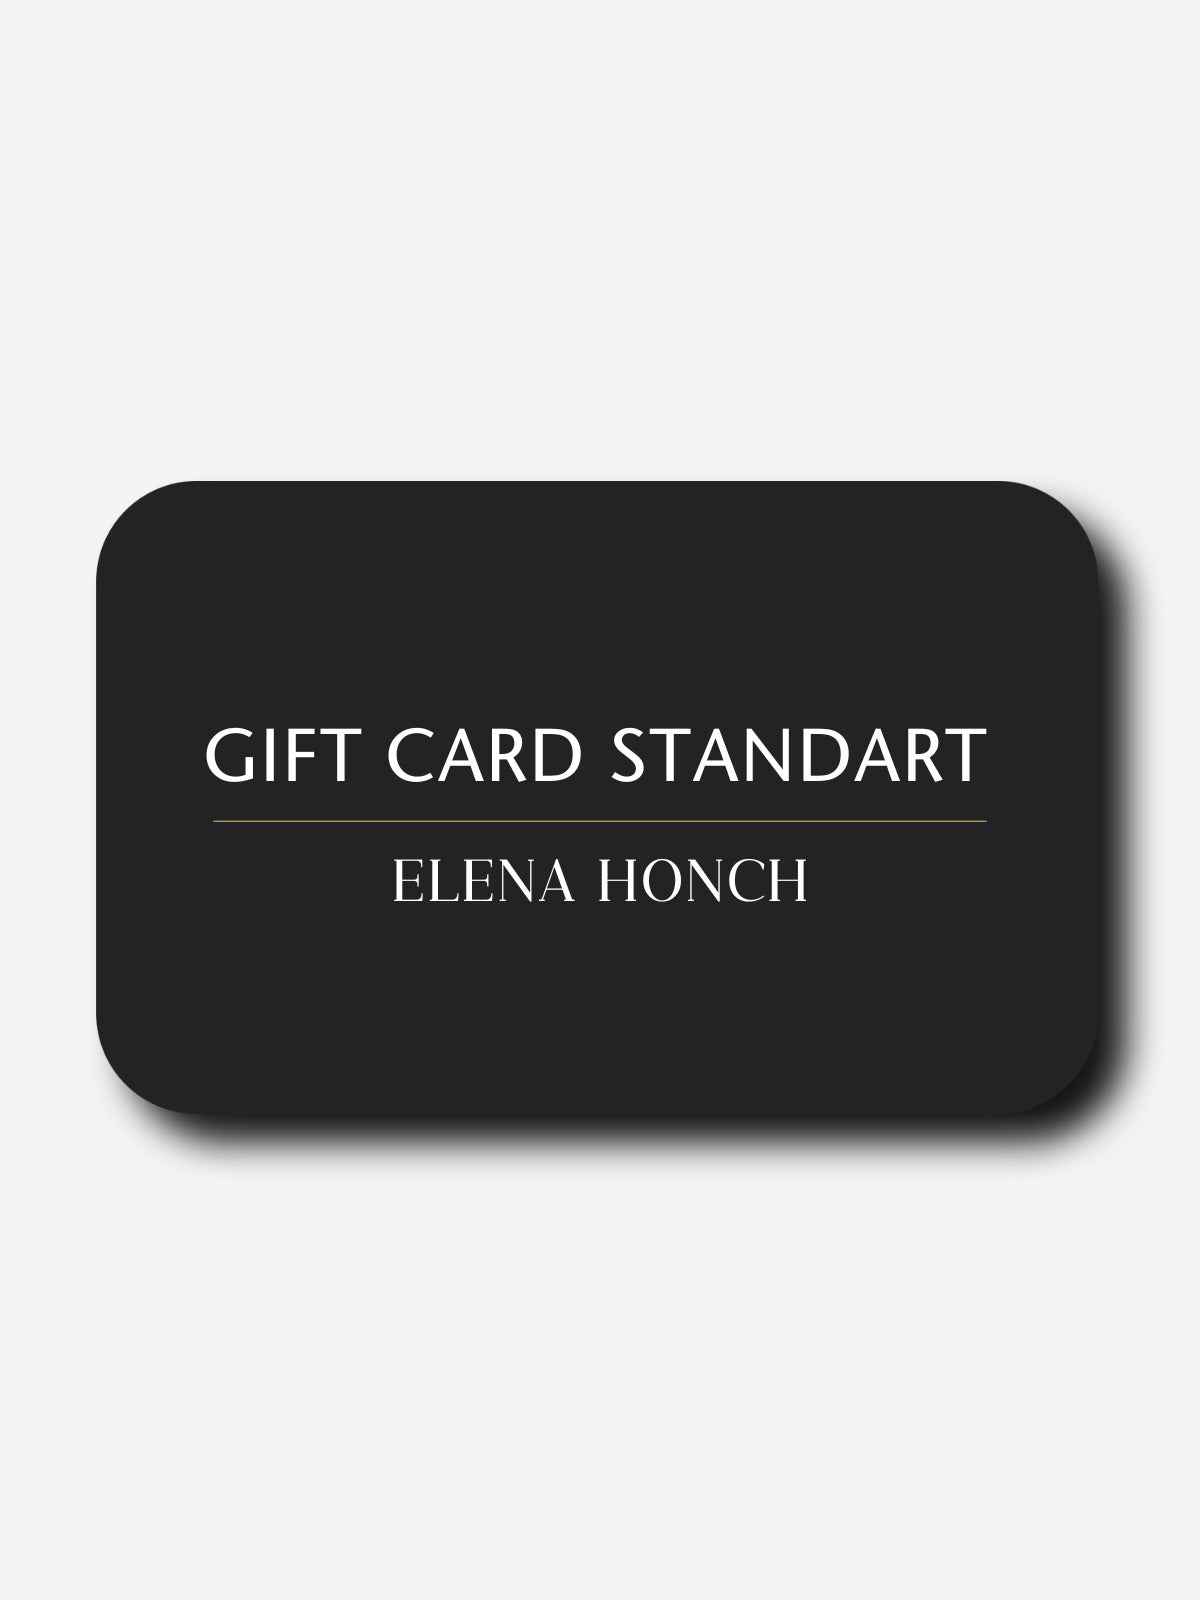 Gift Card Standart - ELENA HONCH